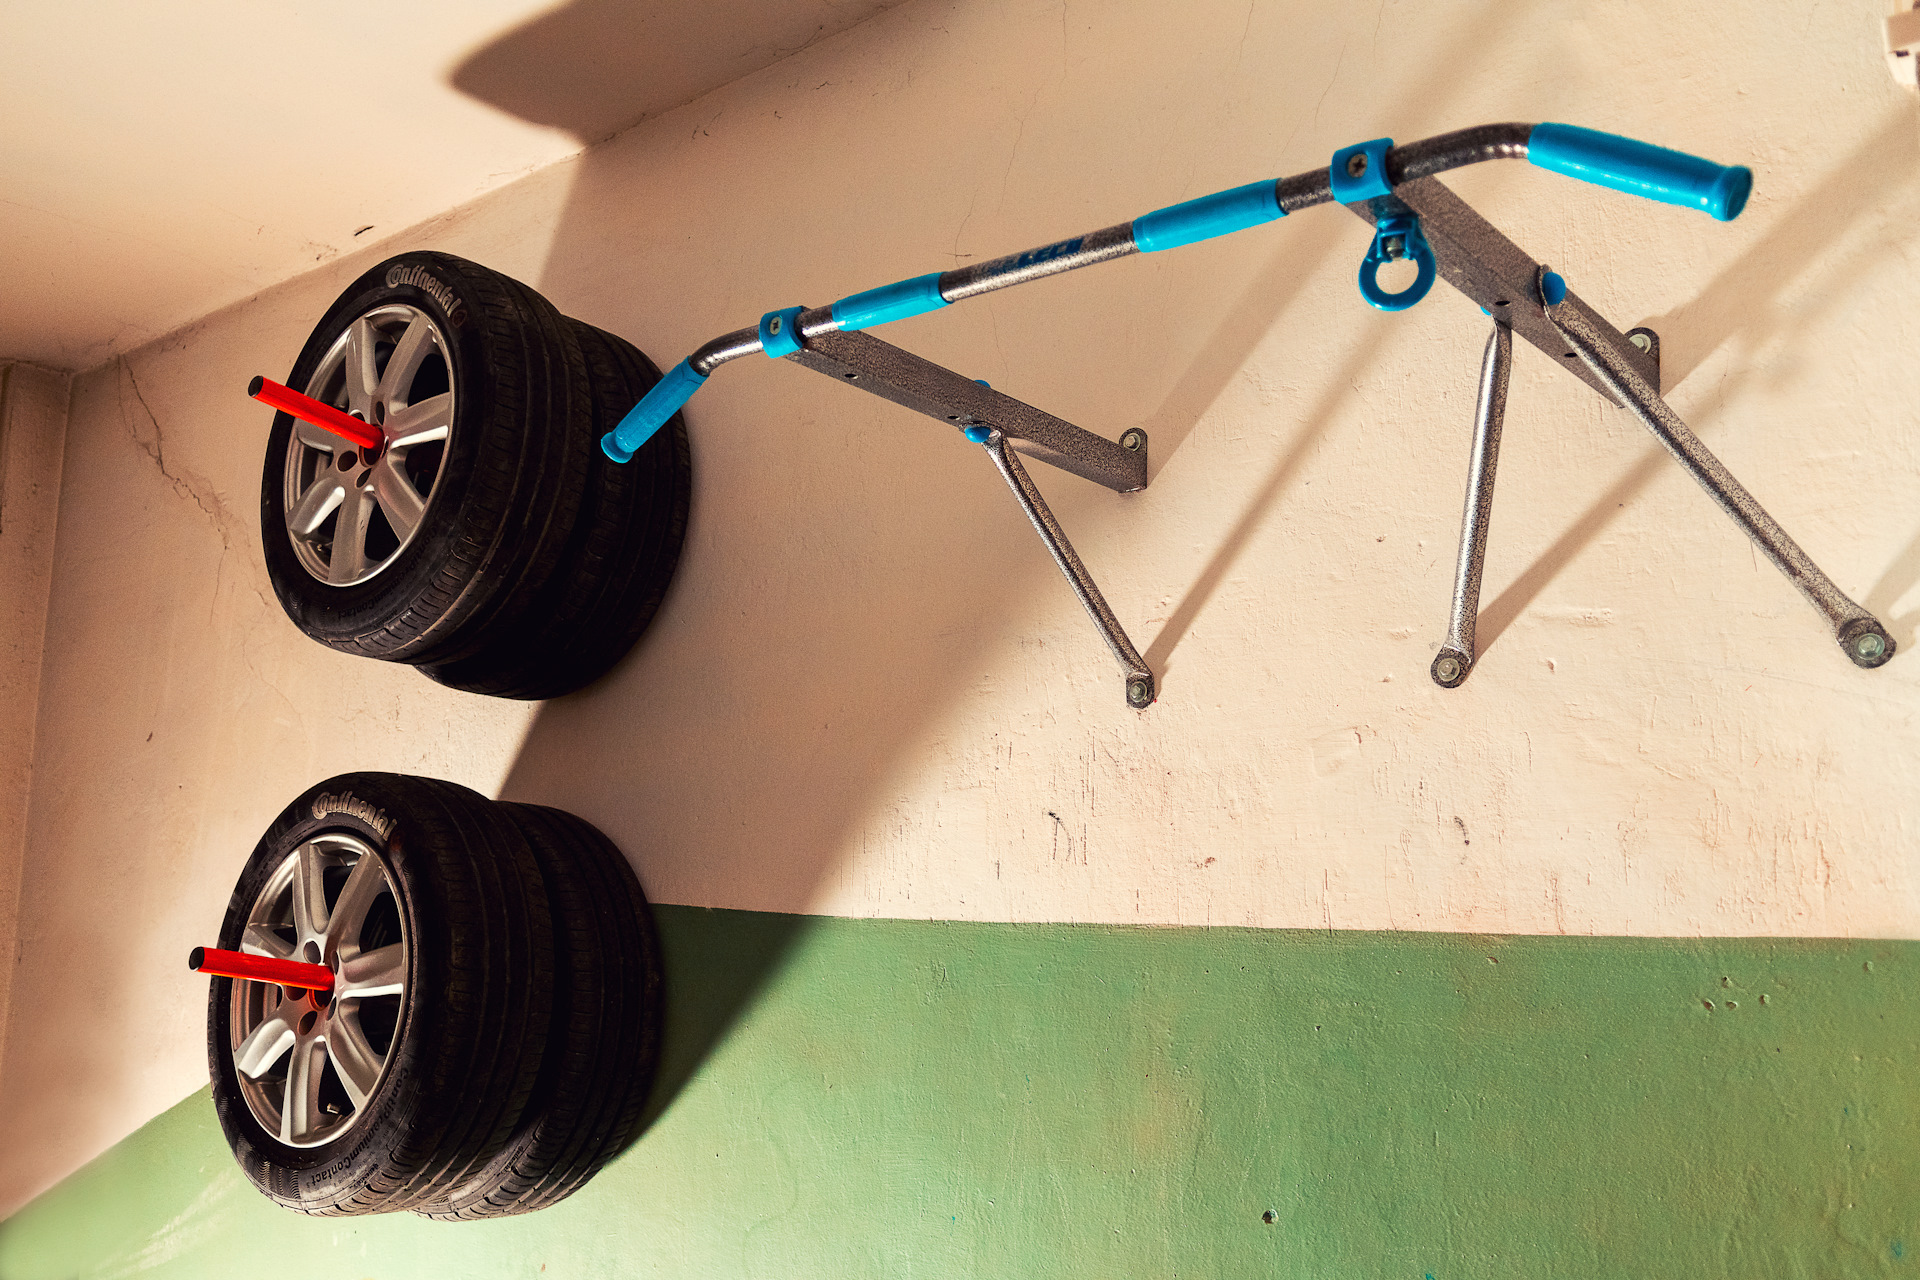 Кронштейн для подвешивания колес в гараже